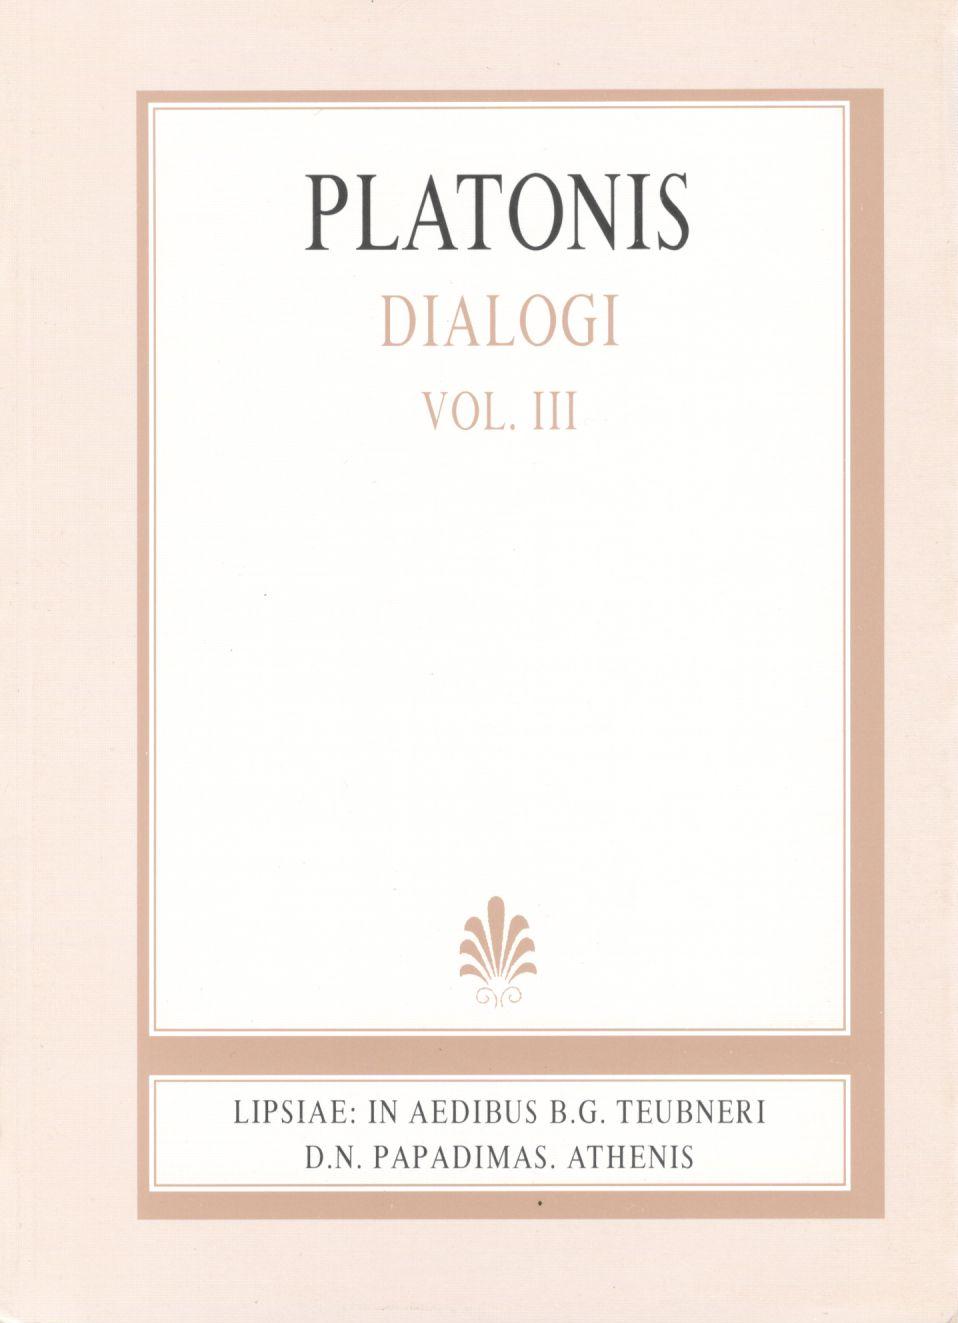 Platonis, Dialogi, Vol. III, [Πλάτωνος, Διάλογοι, τ. Γ